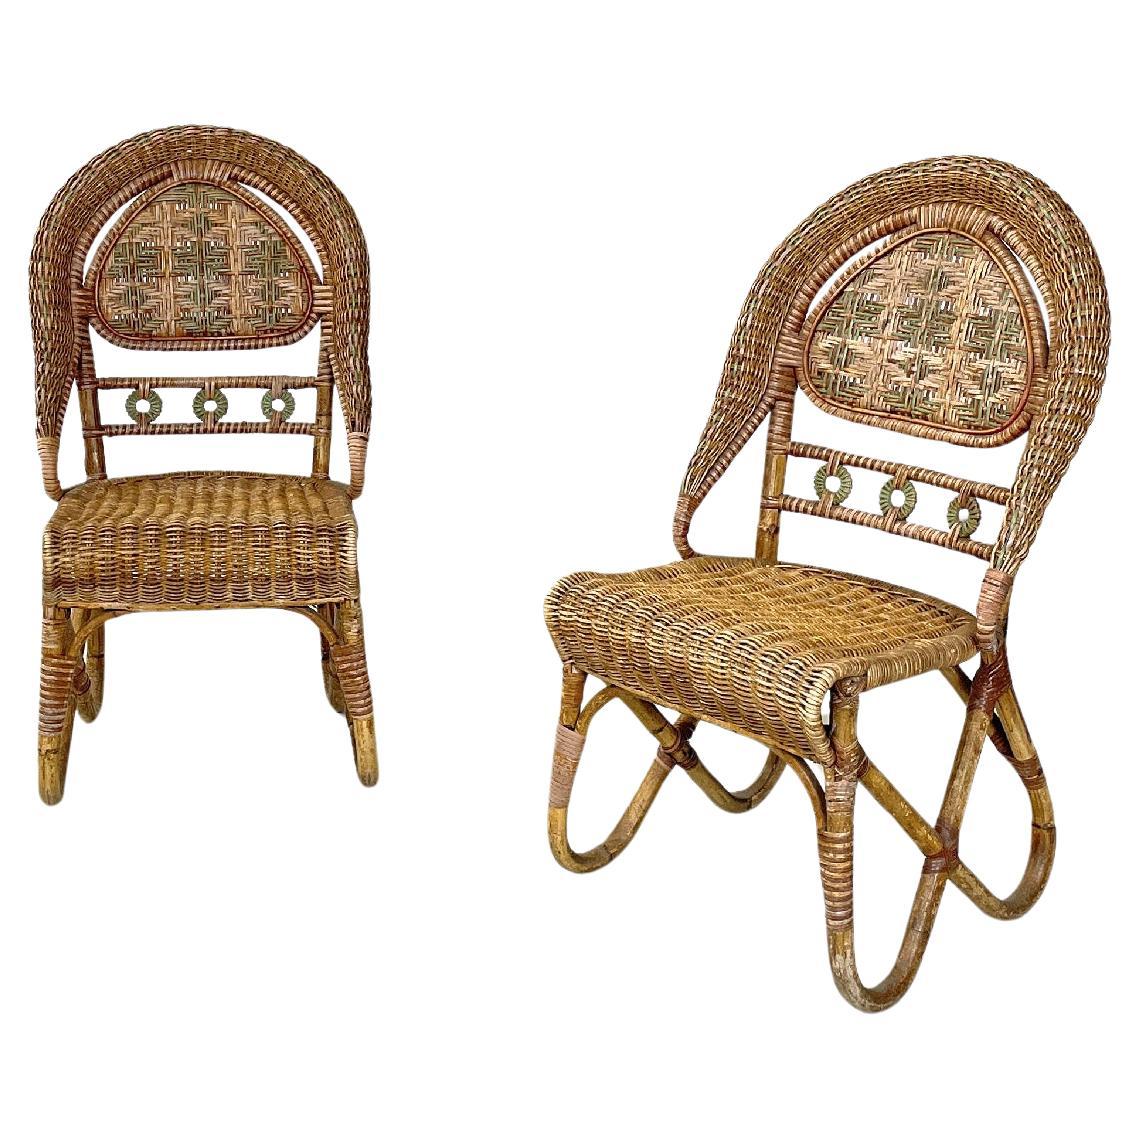 Italiana antique rattan chairs by Mongiardino and Bonacina for Bonacina, 1900s